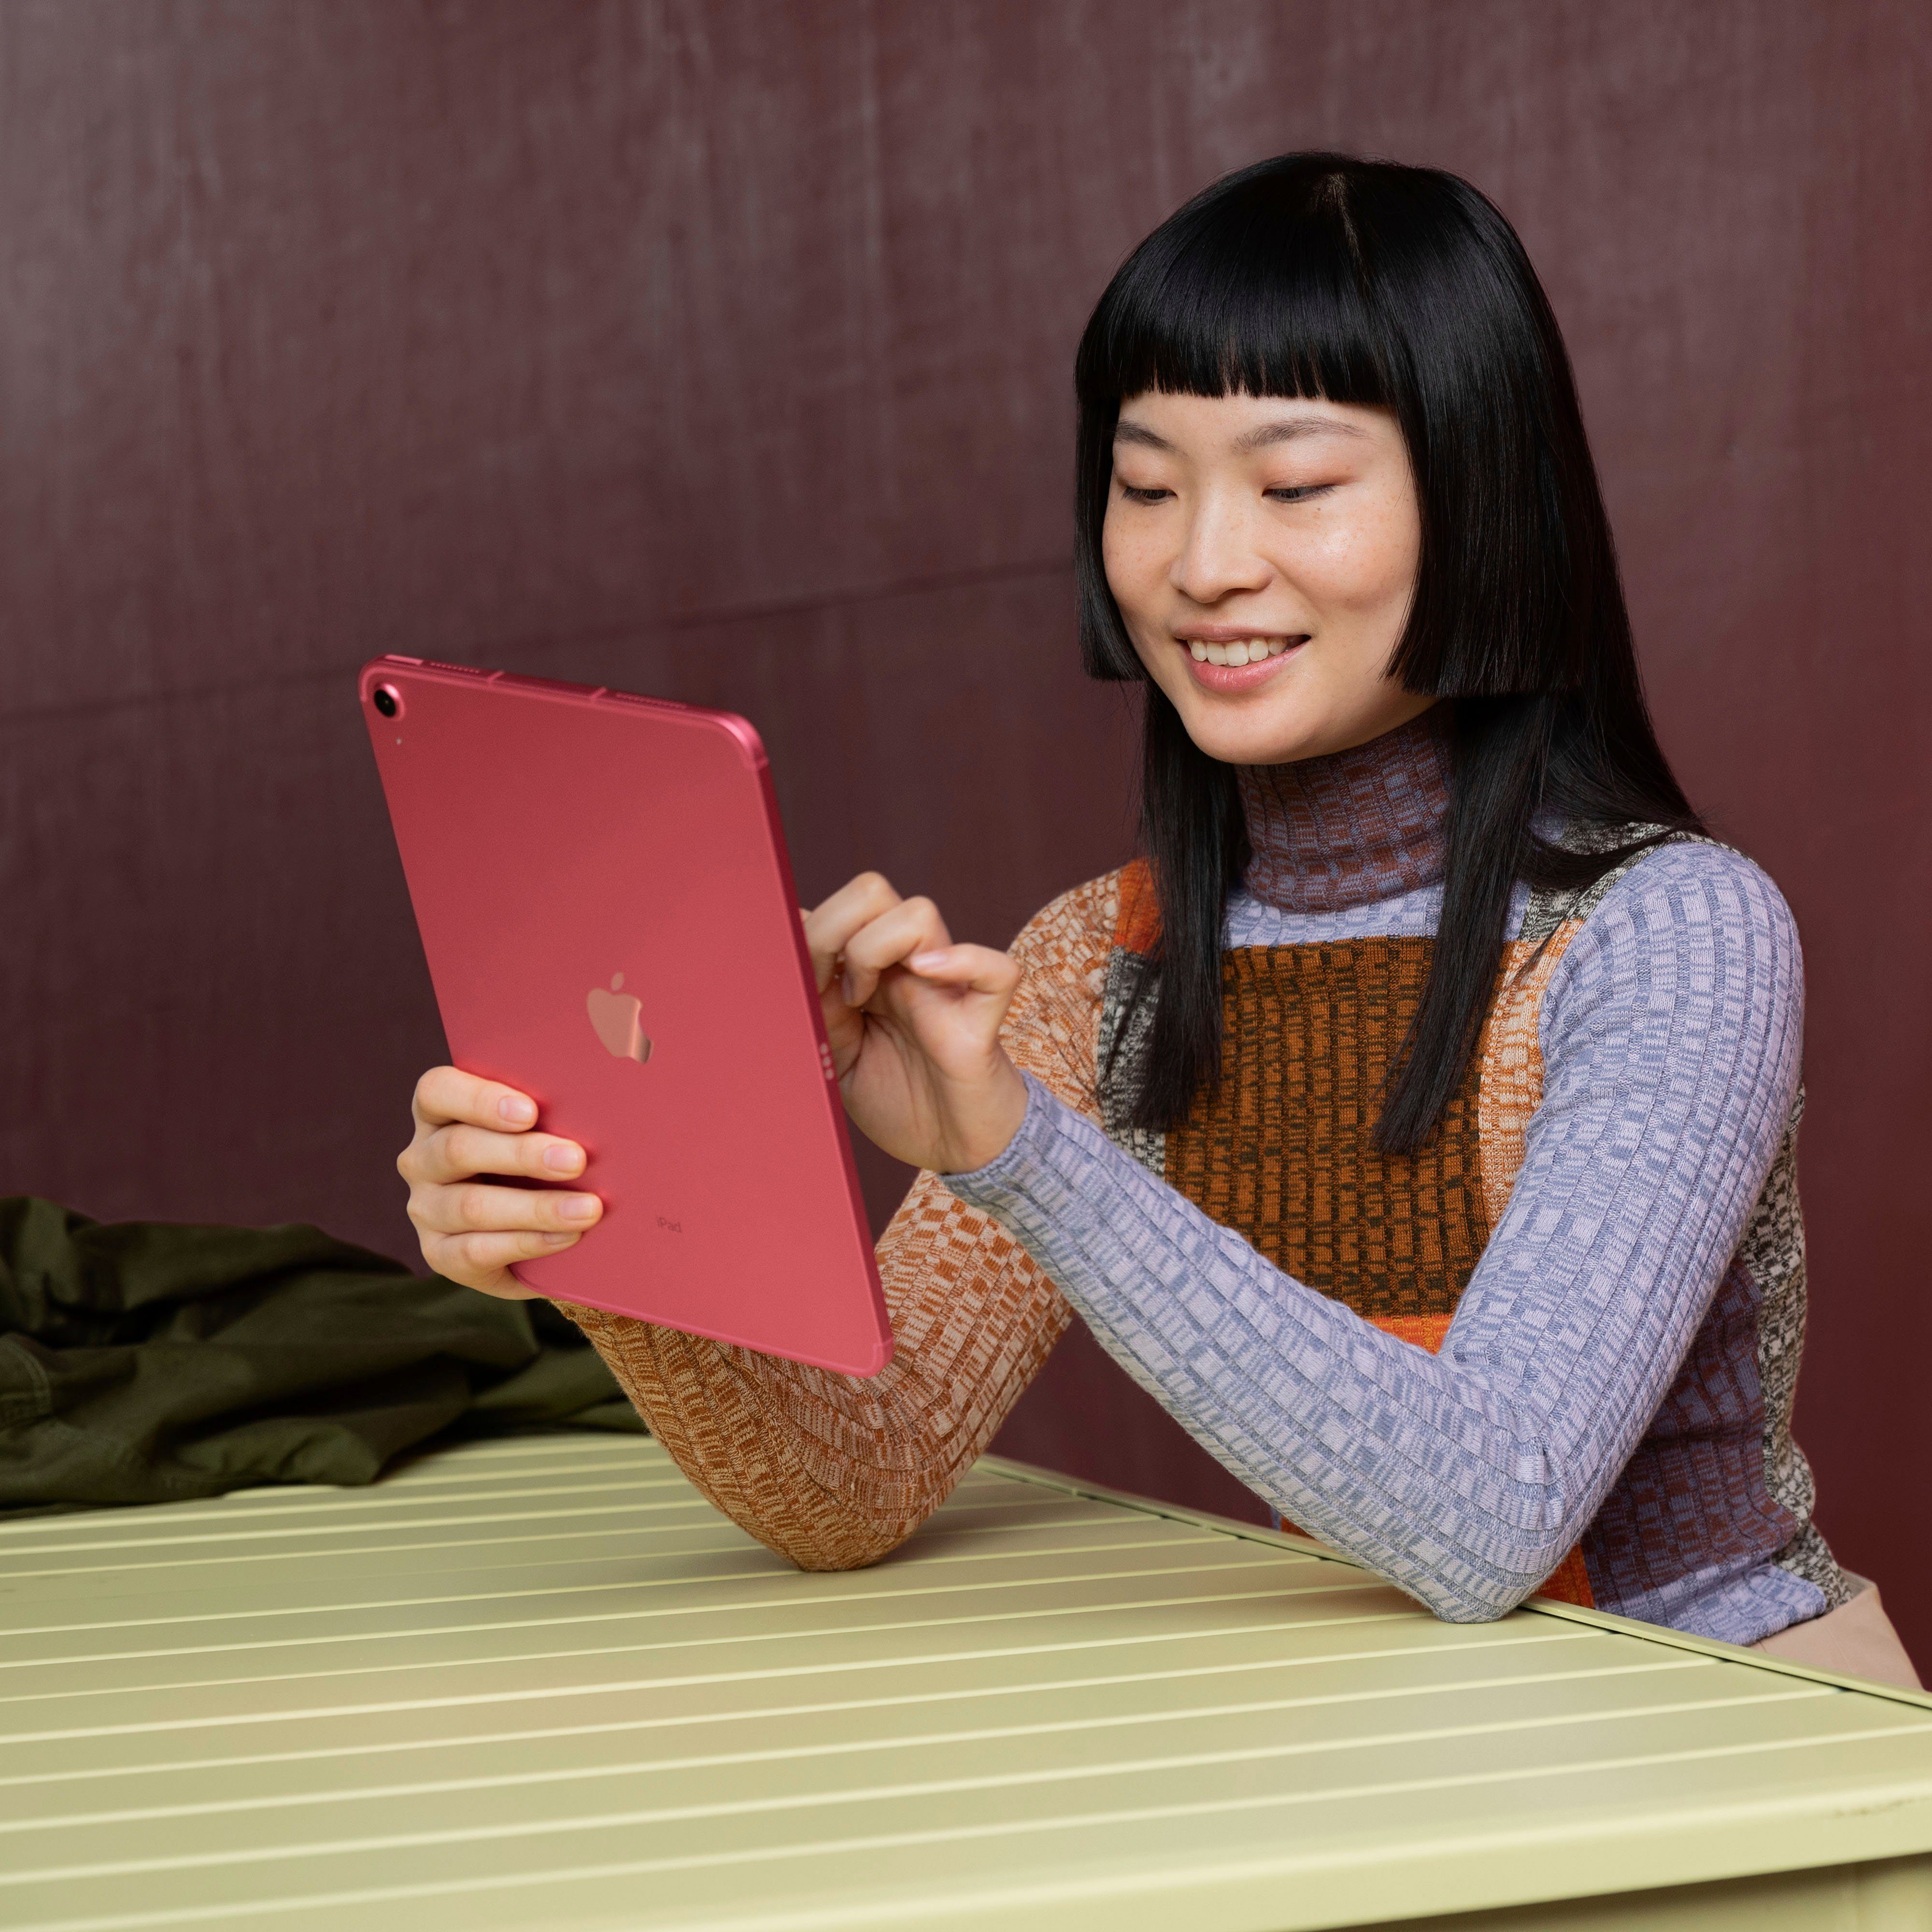 Cellular pink Generation) 256 iPadOS, 2022 (10 + 5G) GB, Wi-Fi Tablet iPad (10,9", Apple